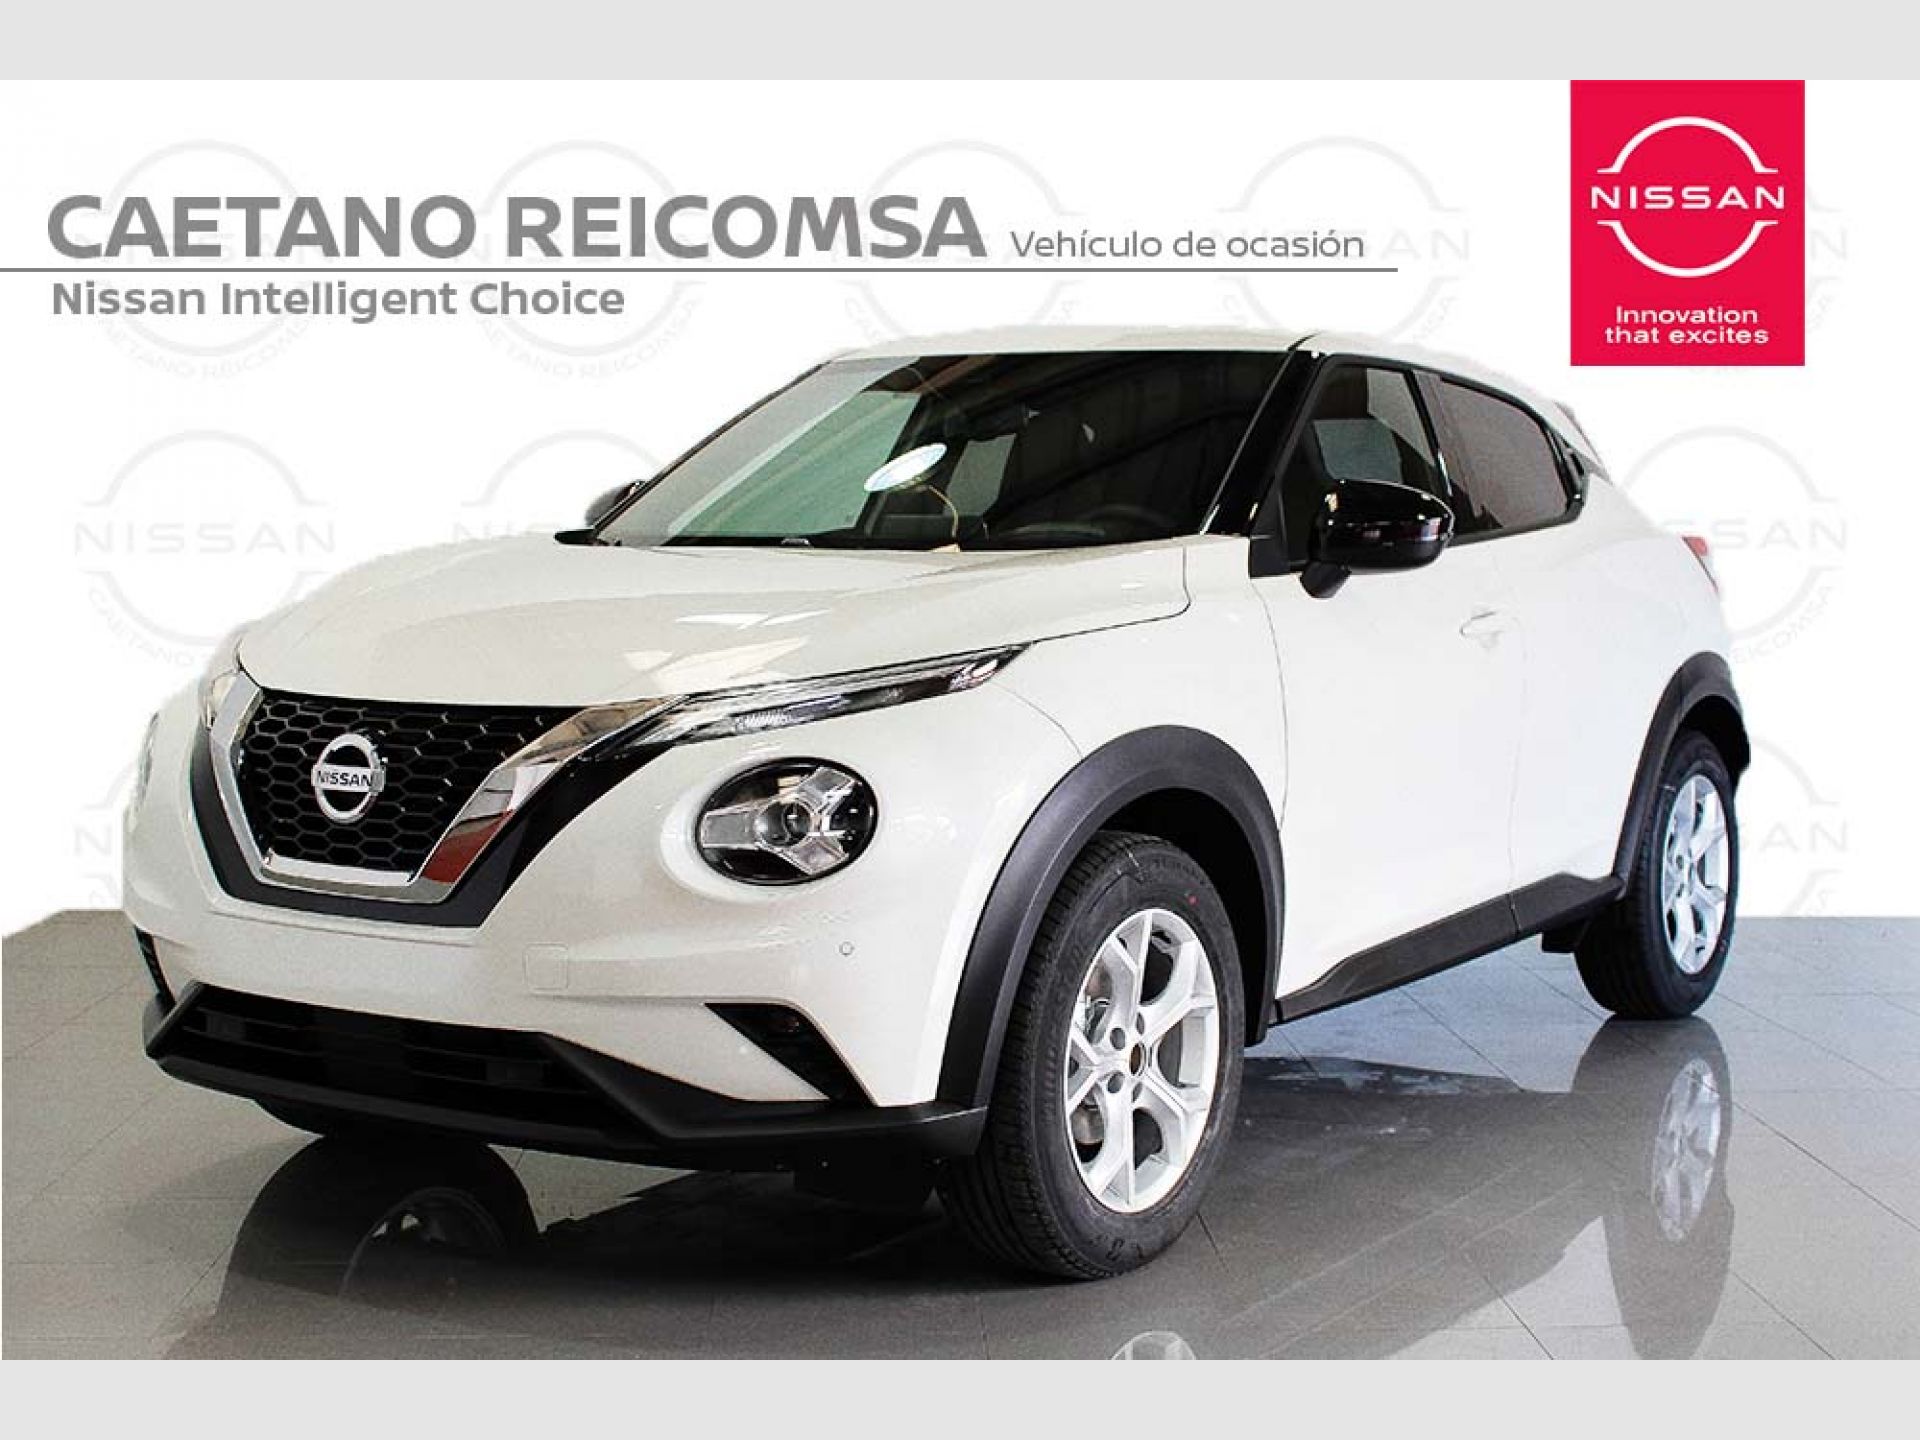 Nissan DIG-T 84 kW (114 CV) DCT 7 V N-Connecta 2021 7000 kms Sapporo White (sólido) segunda mano Madrid (1563) | Caetano Cuzco